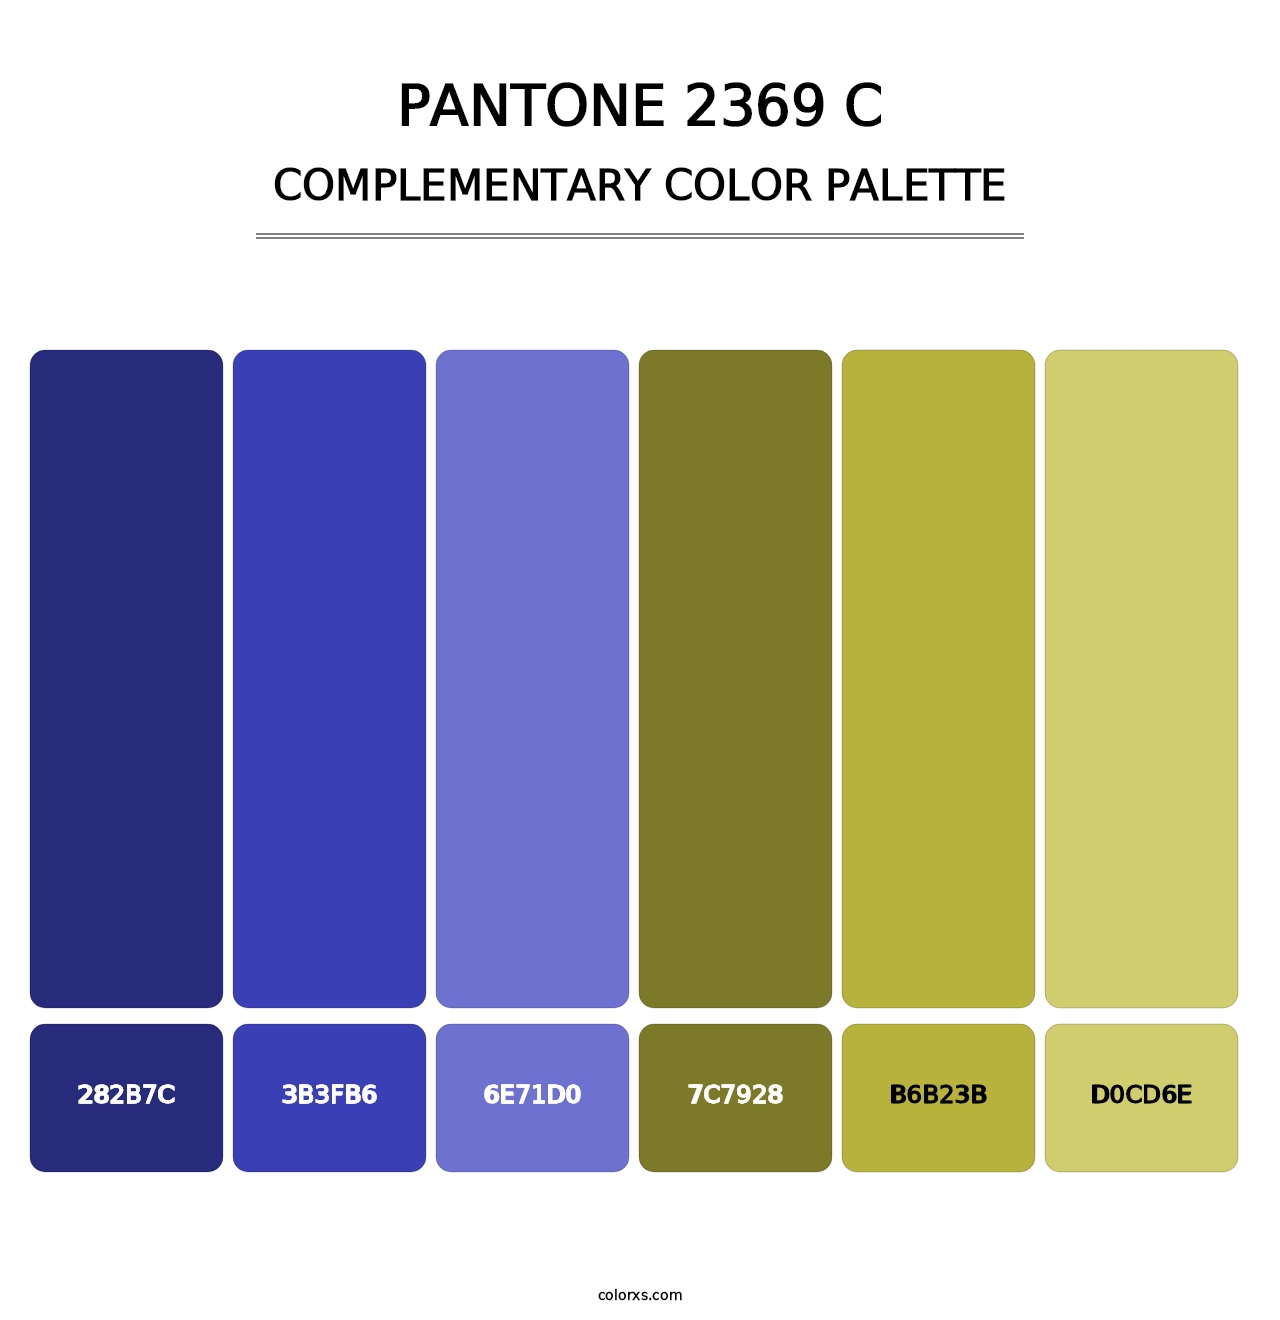 PANTONE 2369 C - Complementary Color Palette